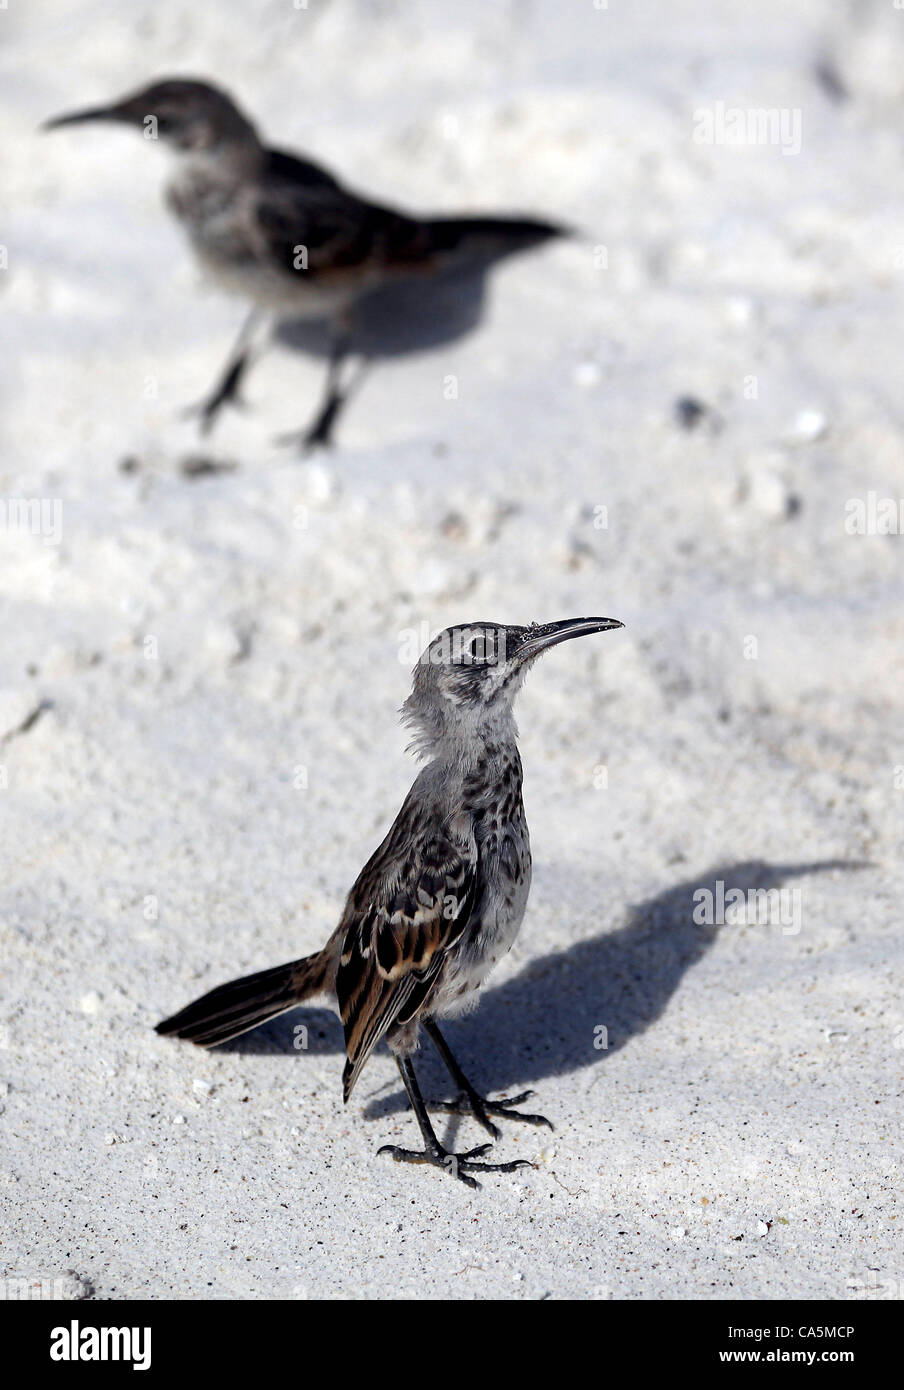 Giugno 12, 2012 - All'Isola Espanola, Galapagos, Ecuador - Due mockingbirds cofano sono fotografati su una spiaggia all'Isola Espanola nelle Galapagos. (Credito Immagine: © Julia Cumes/ZUMAPRESS.com) Foto Stock